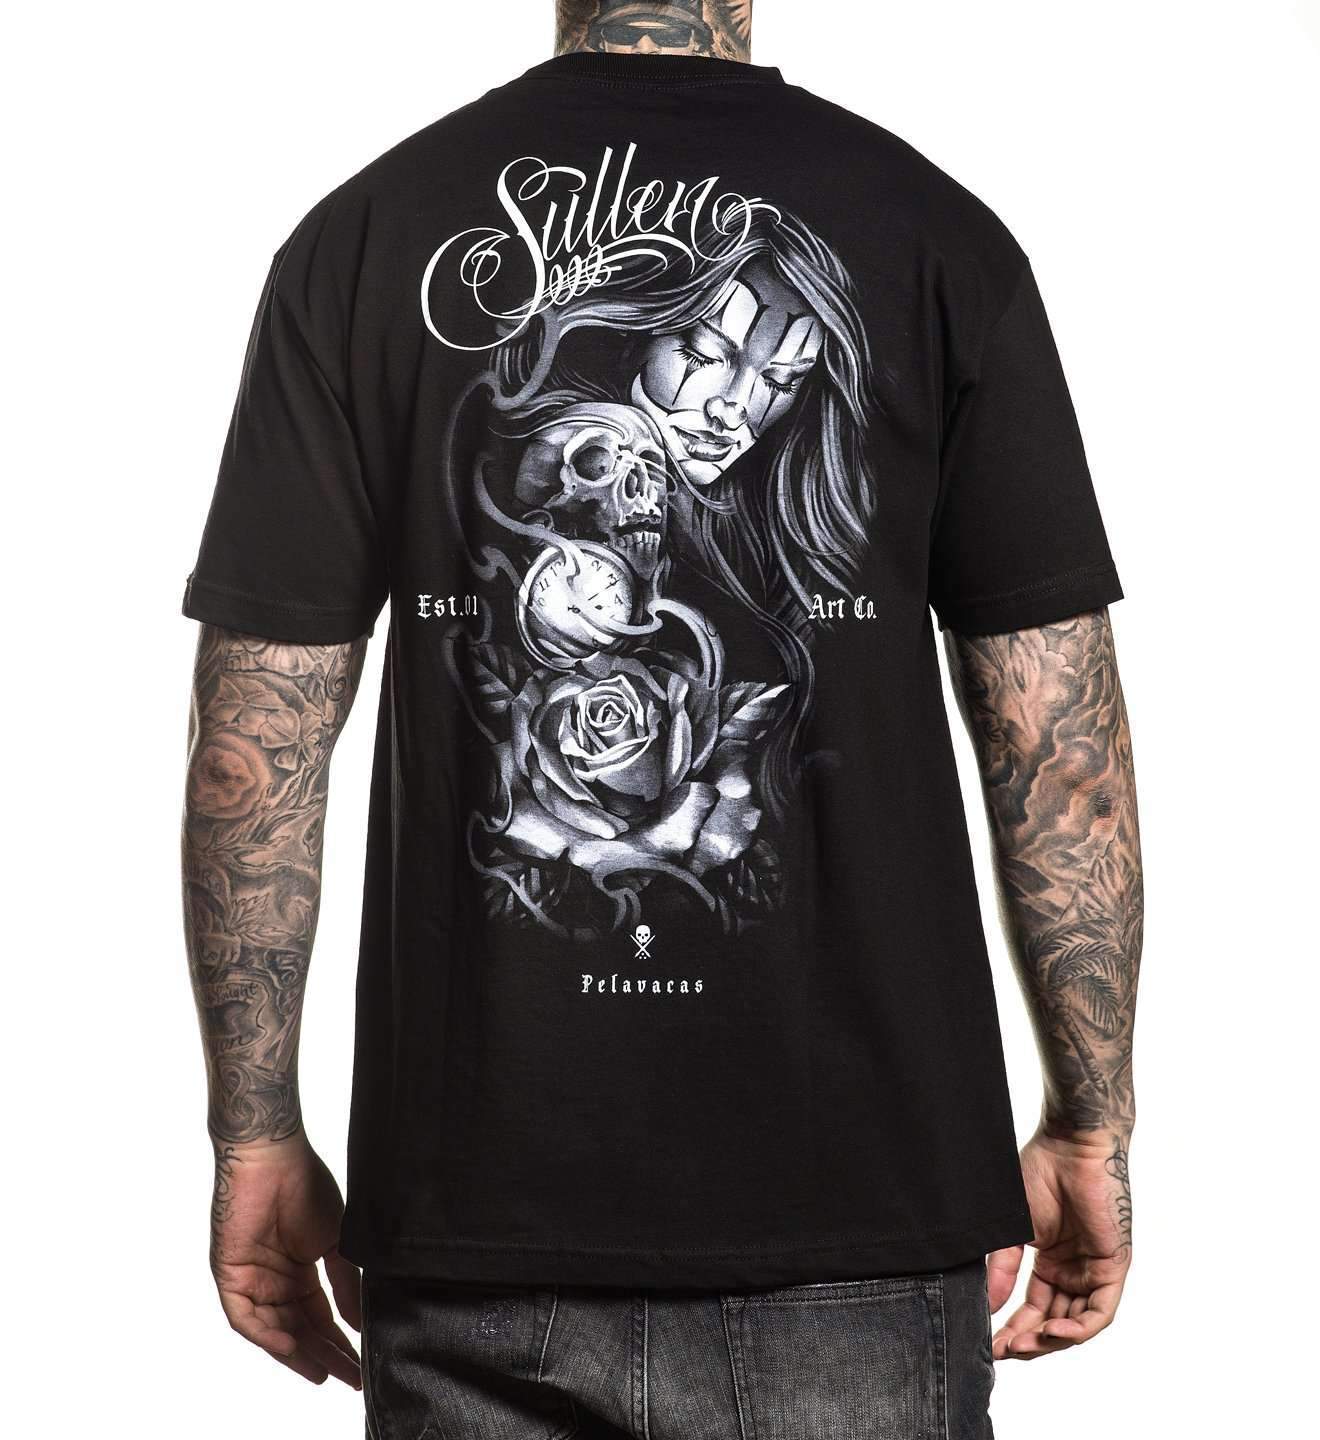 Artwork collection. Футболка Sullen Art. Sullen Art Collective одежда. Sullen Dead hand футболка. Sullen Татуировка.